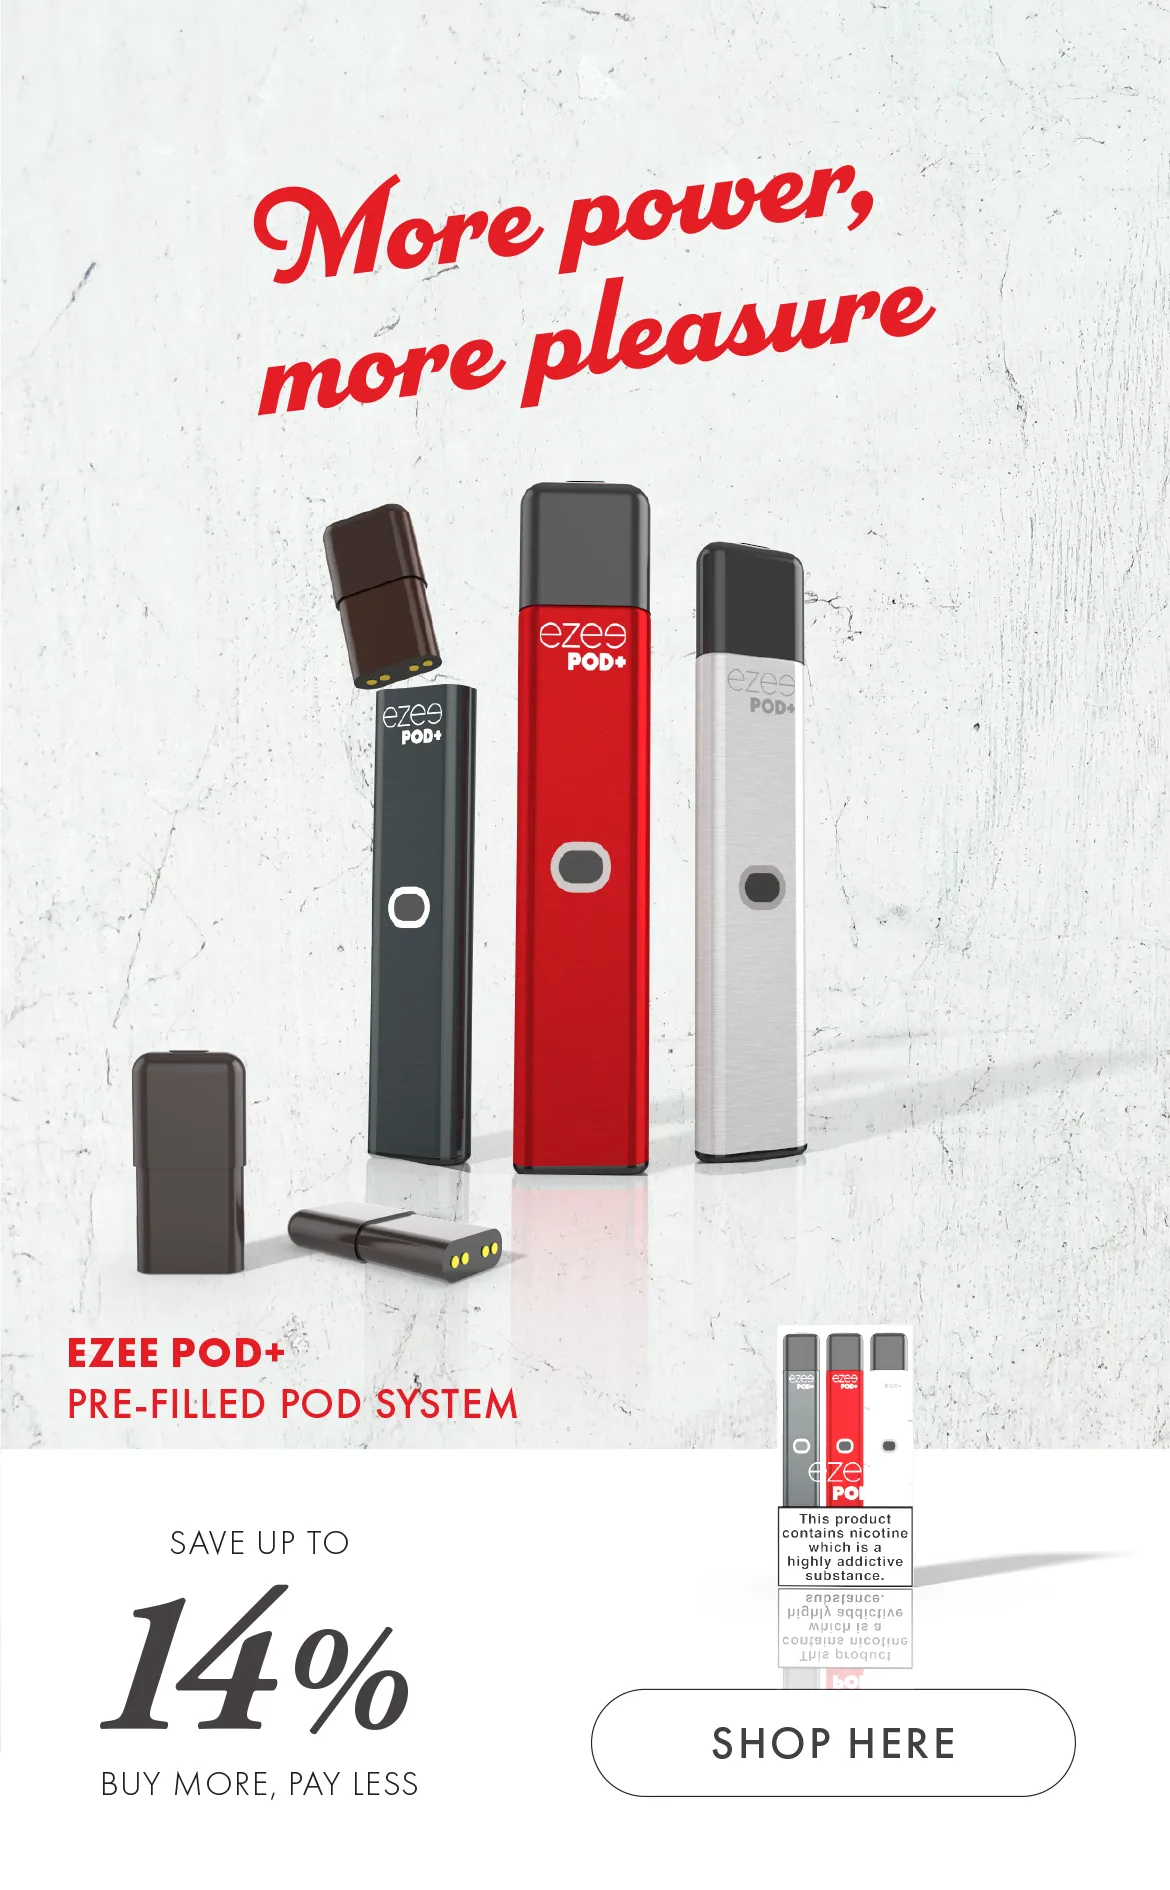 Vape Pod System Ezee Pod+ 2ml e-liquid up to 600 puffs nicotine and nicotine free